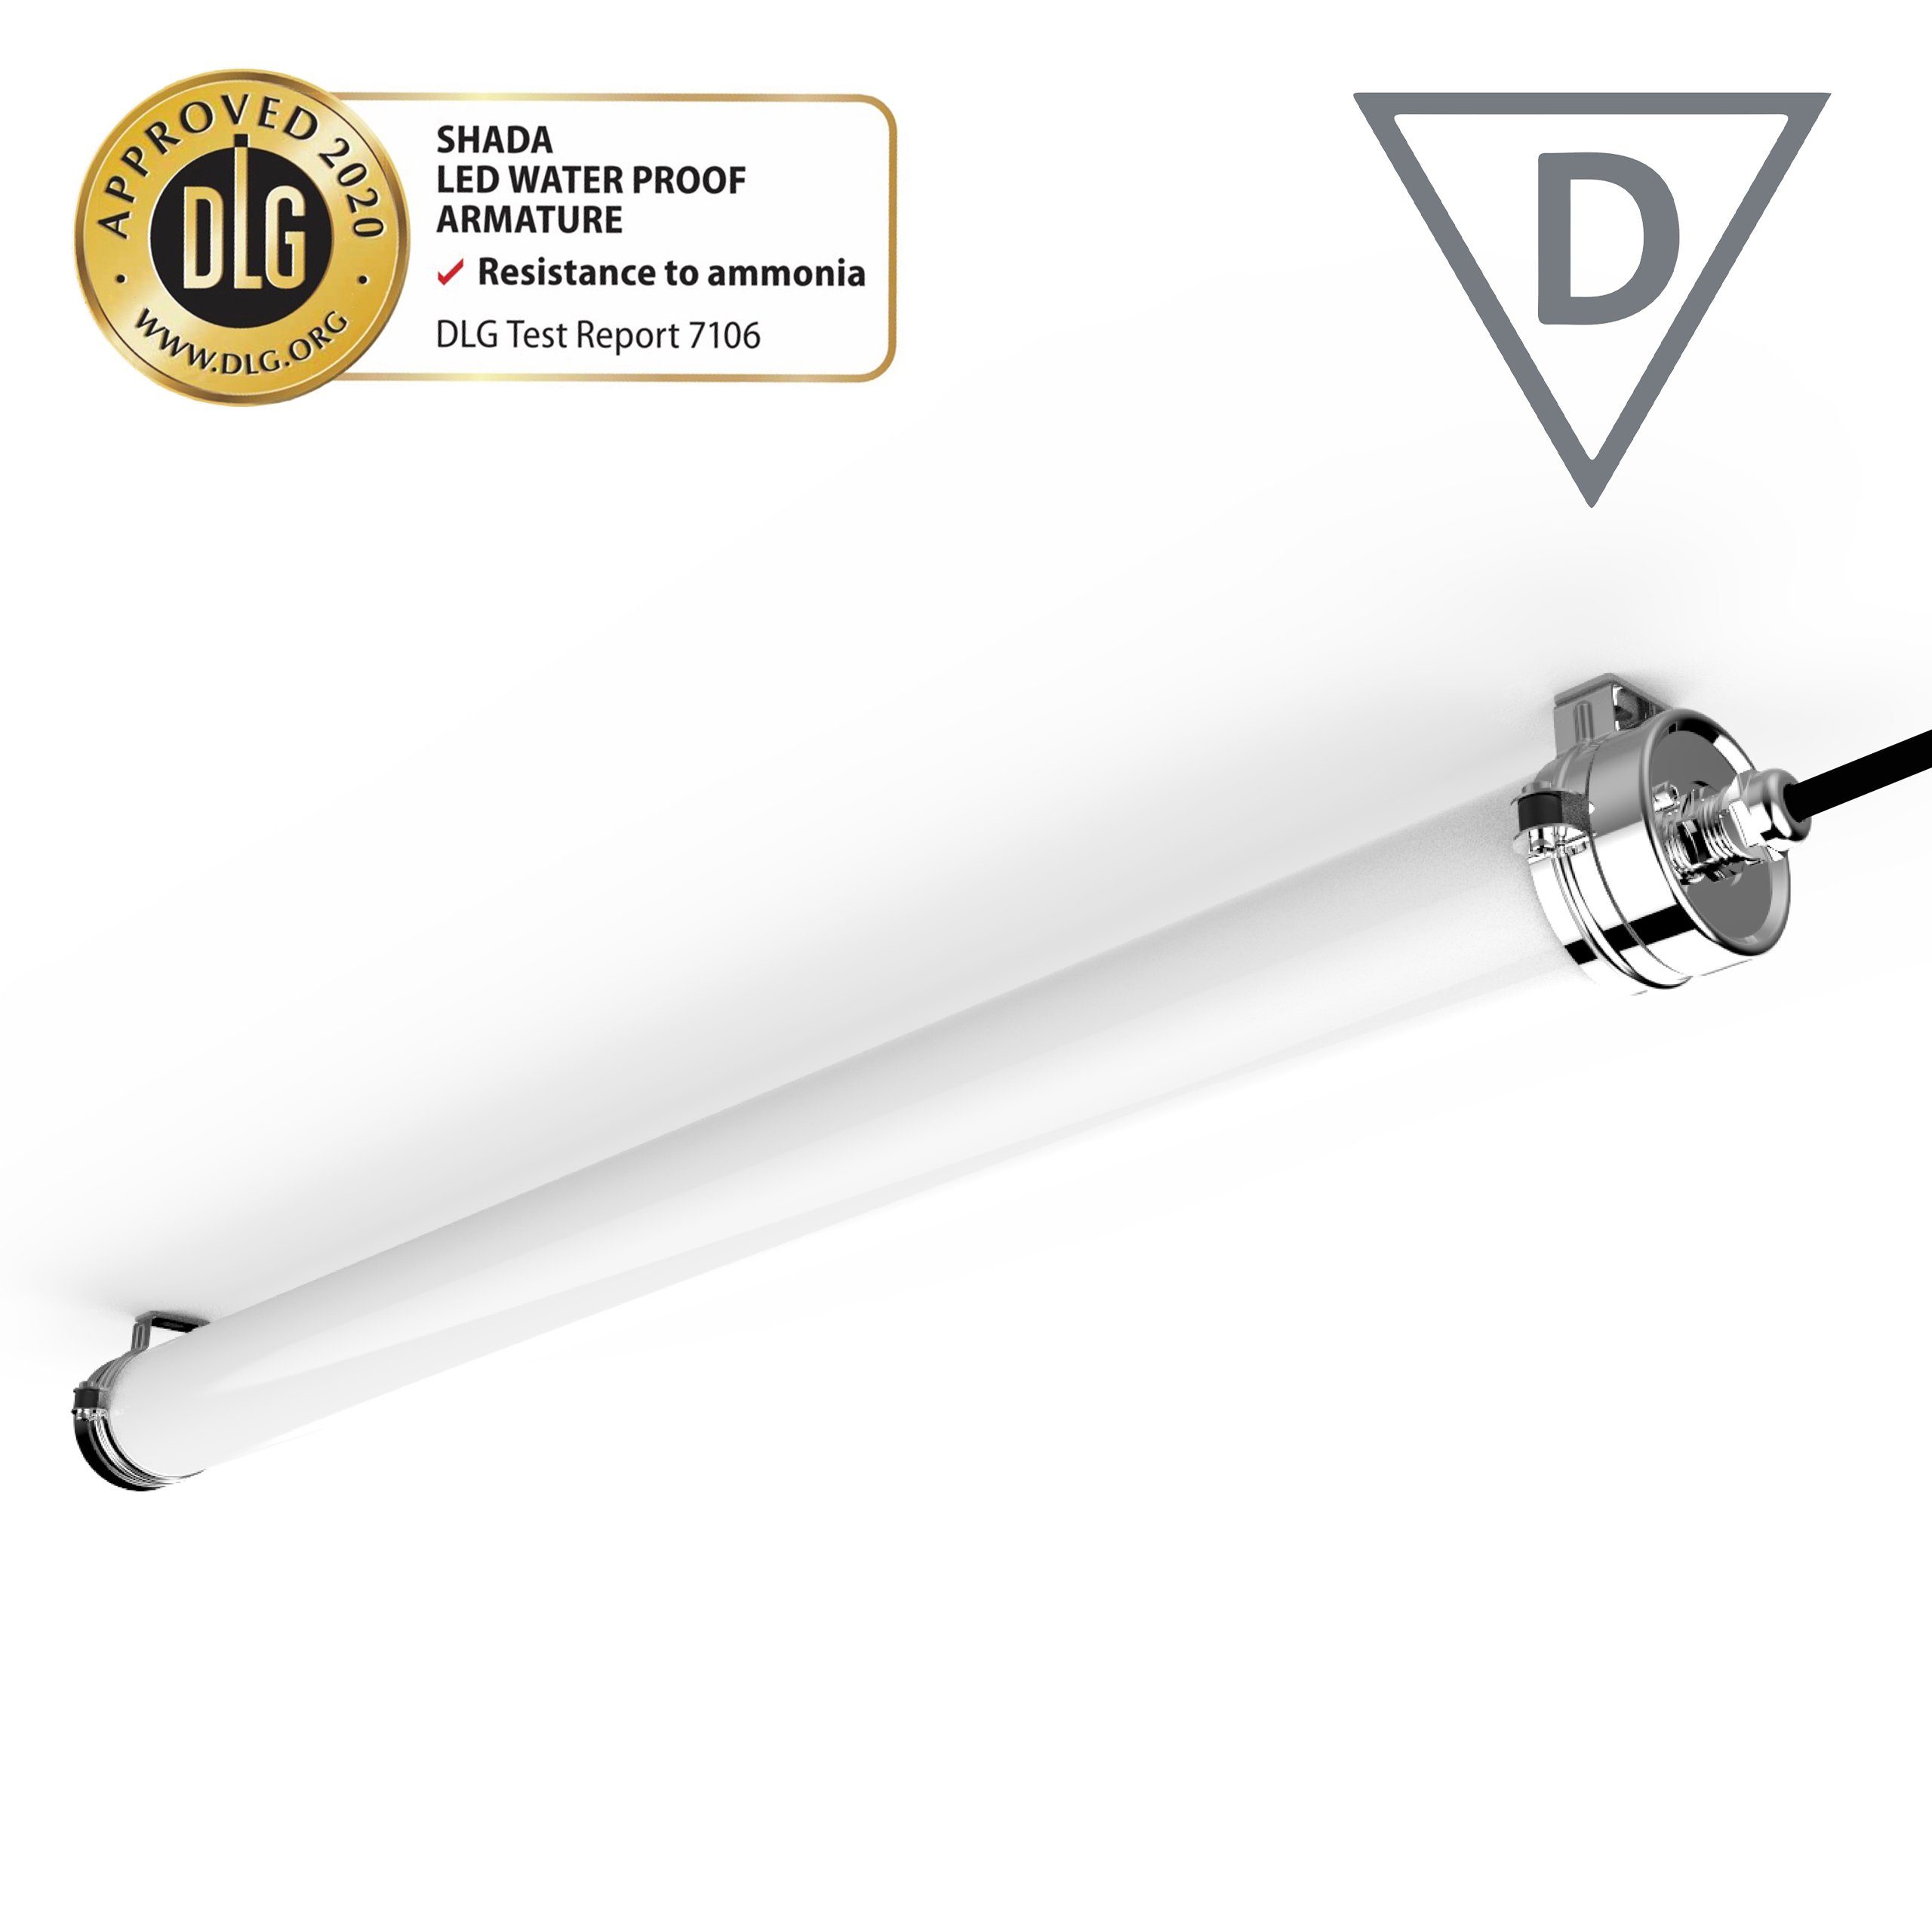 LED's light PRO LED Tierhaltung 2400325 IP69K Pendelleuchte für 40W LED, Ammoniakbeständig 150cm kaltweiß DLG-geprüft LED-Röhrenleuchte